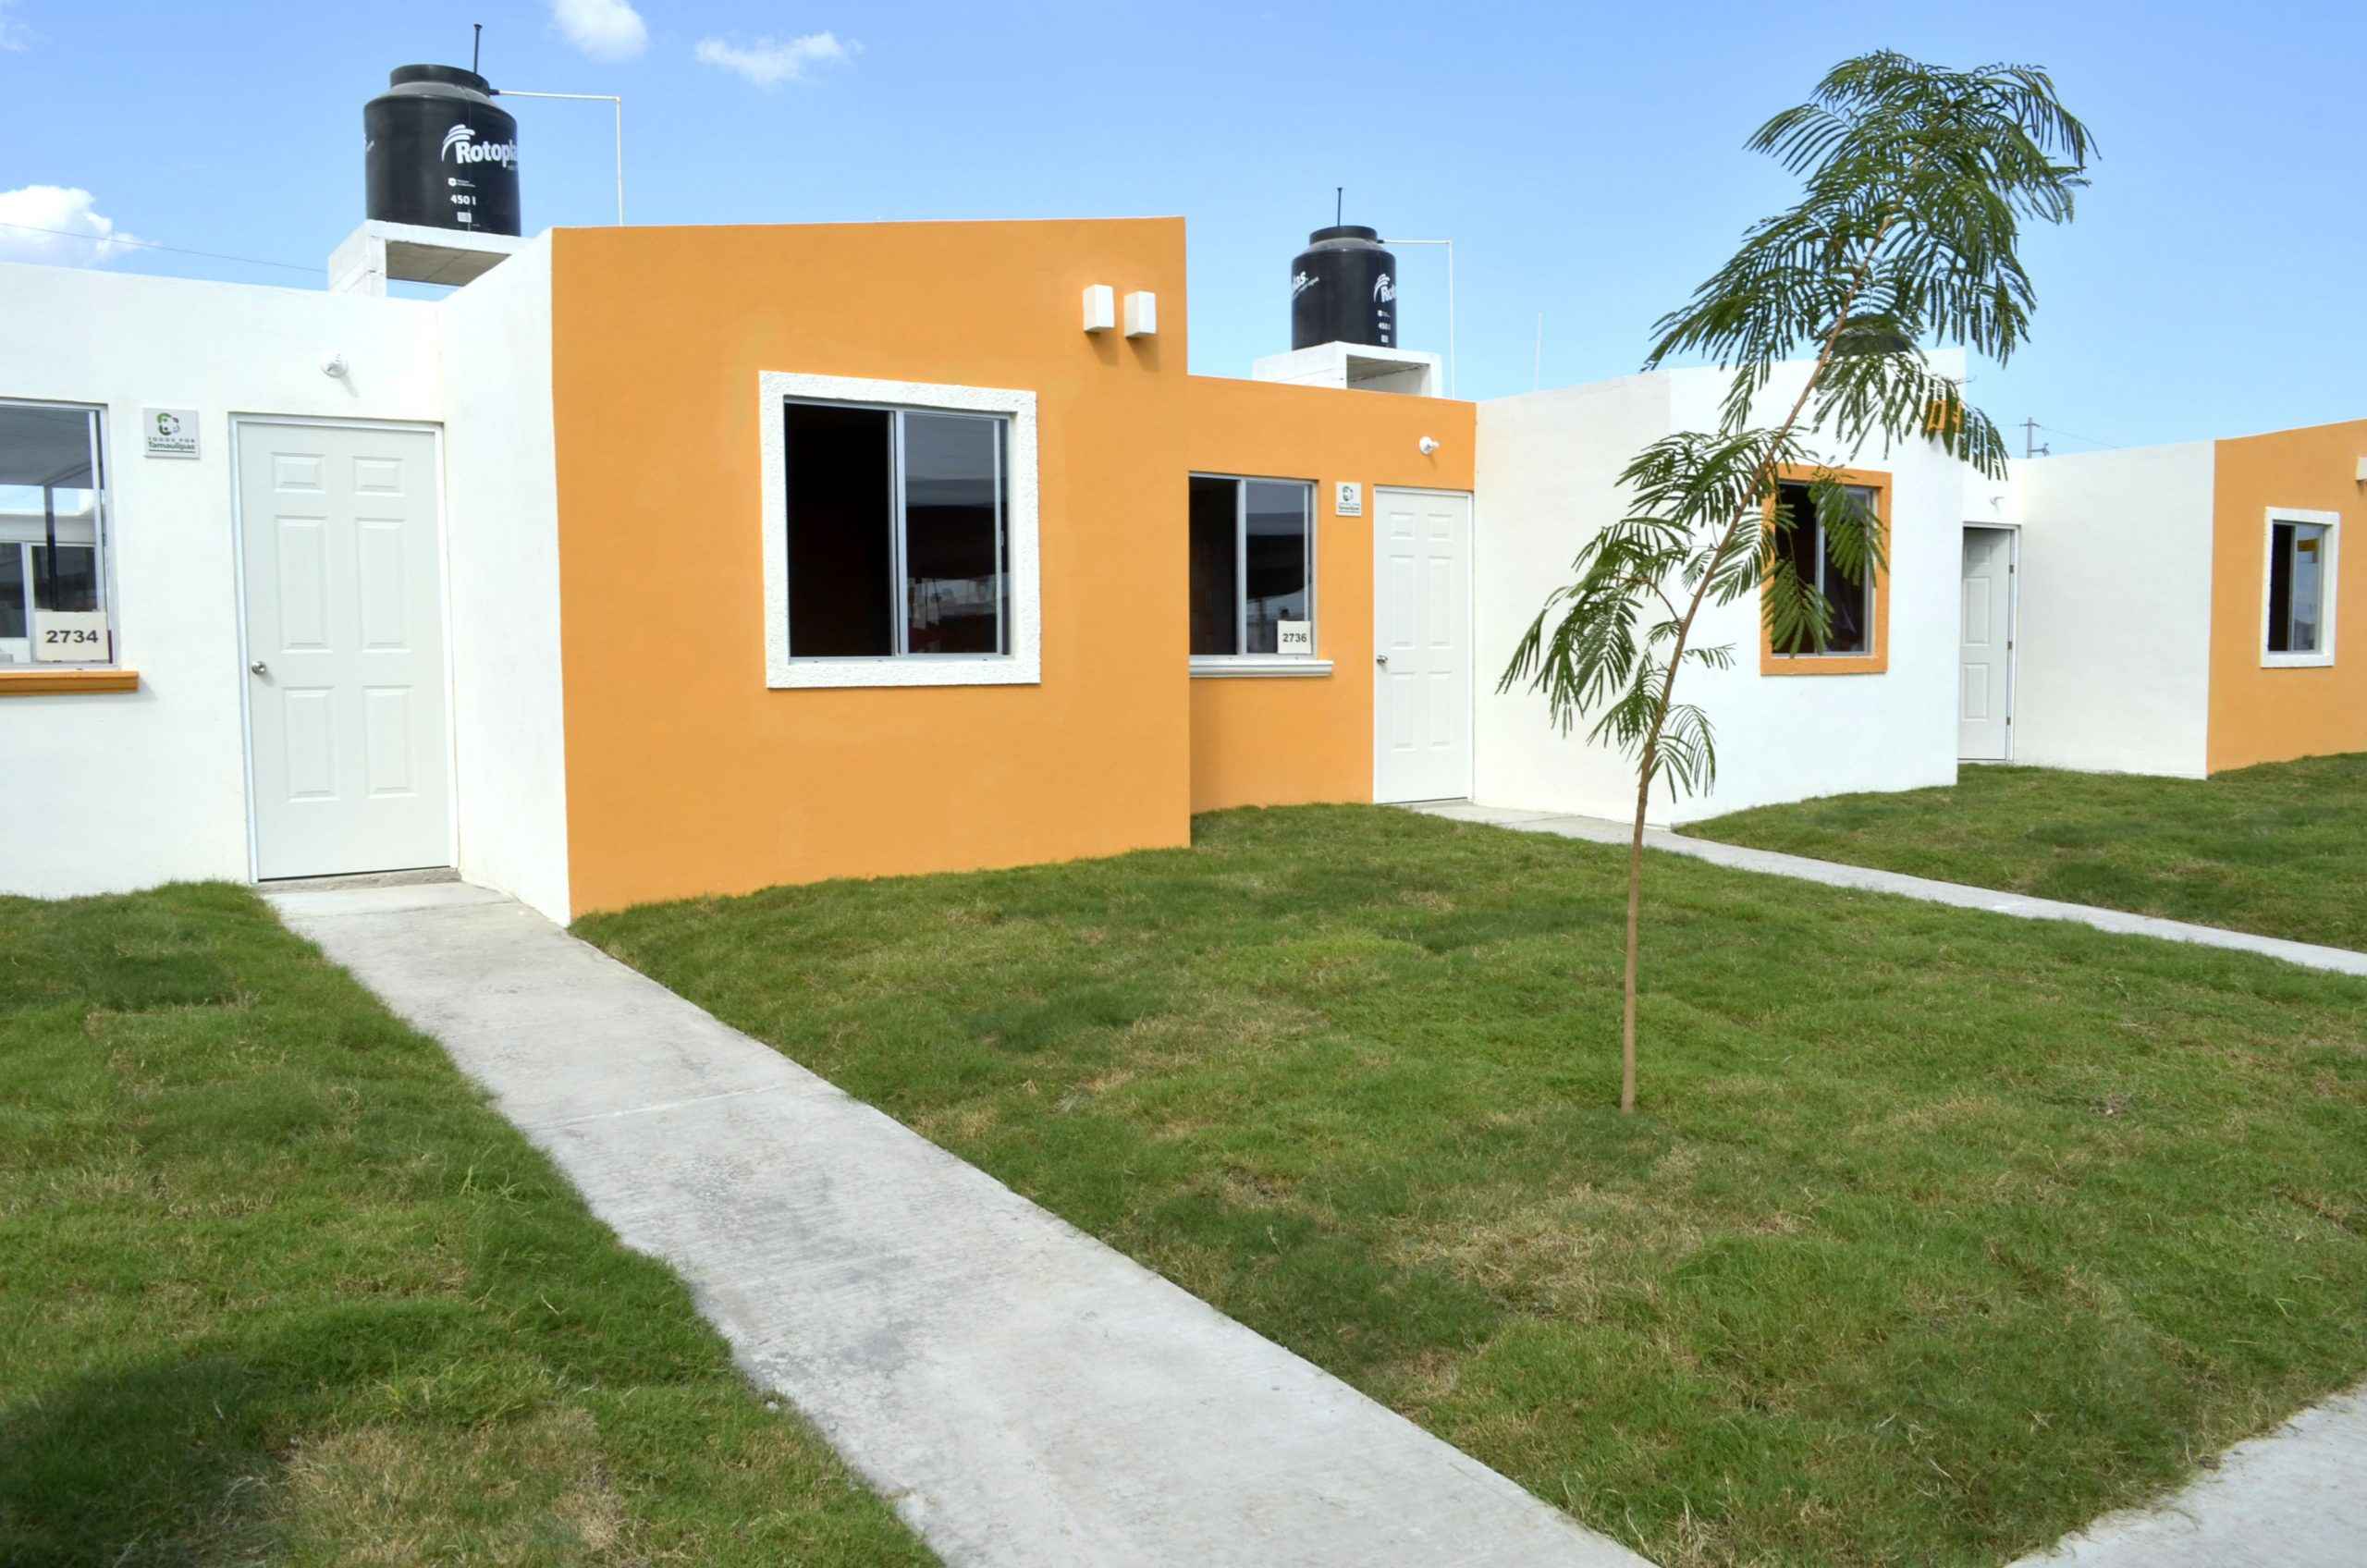 Recursos a programa alternativo de vivienda en Tamaulipas - Mataulipas ok scaled